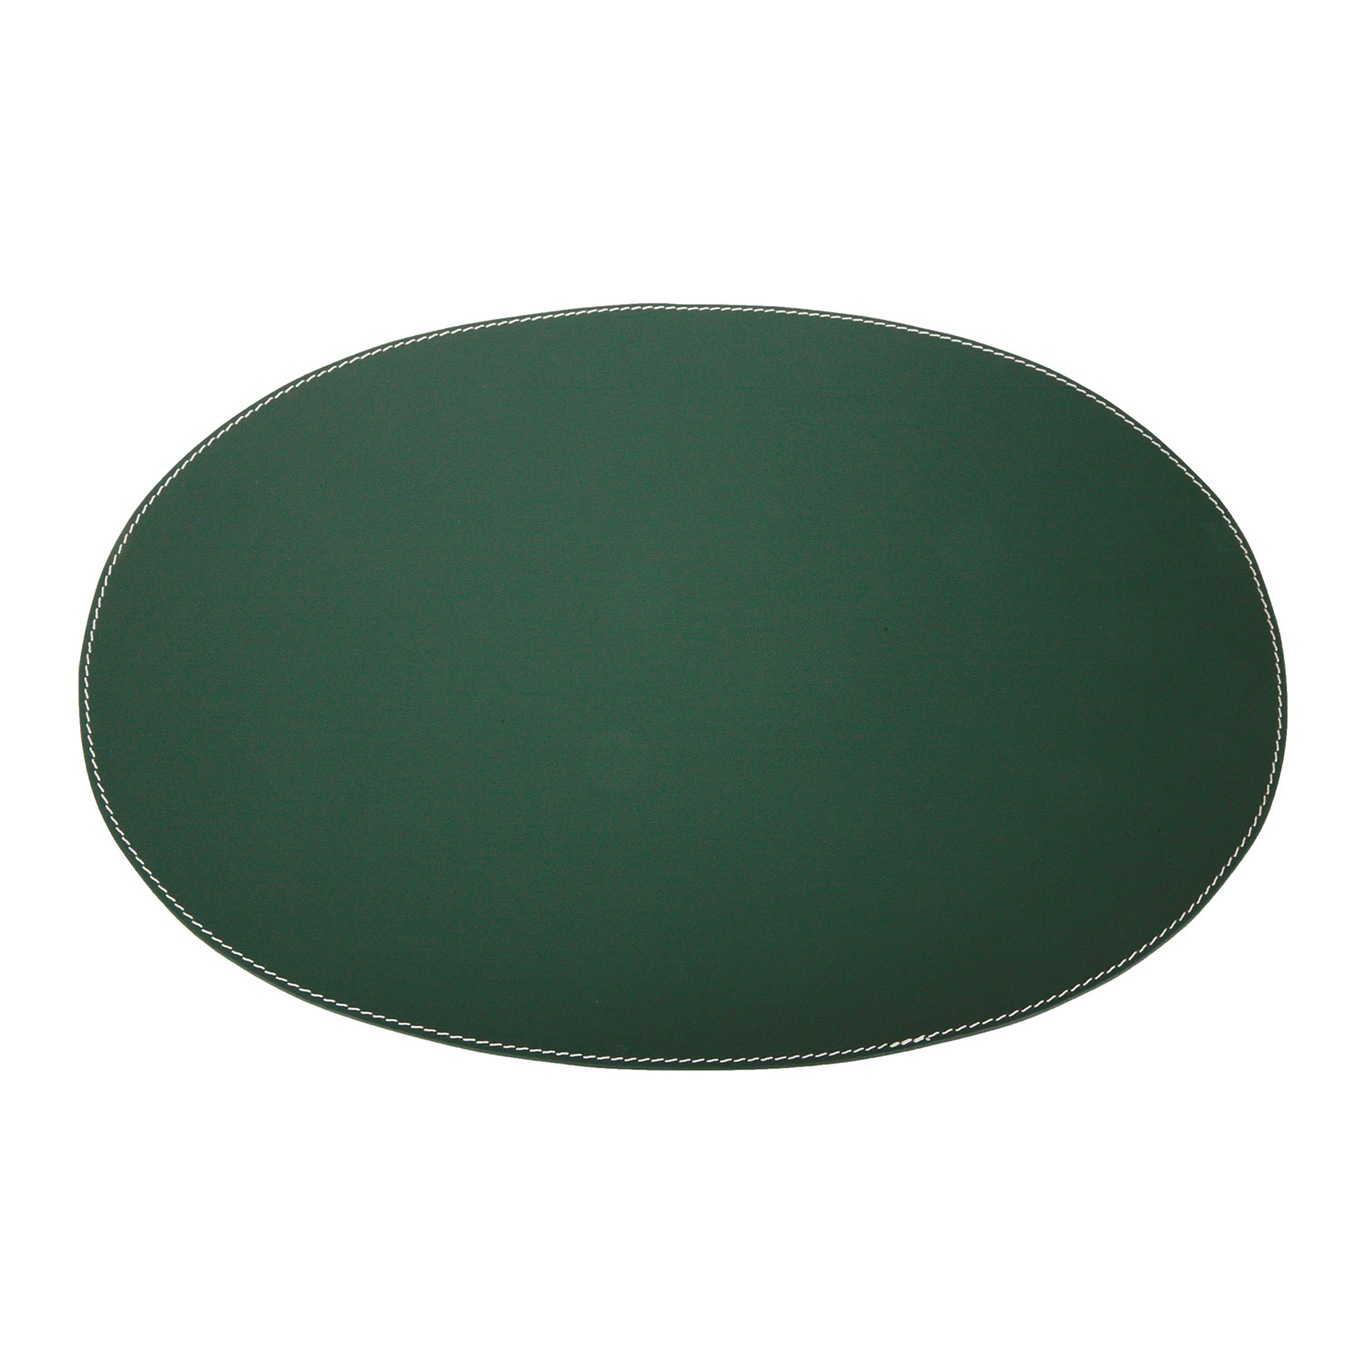 Placemat Oval 35x48cm, Dark Green